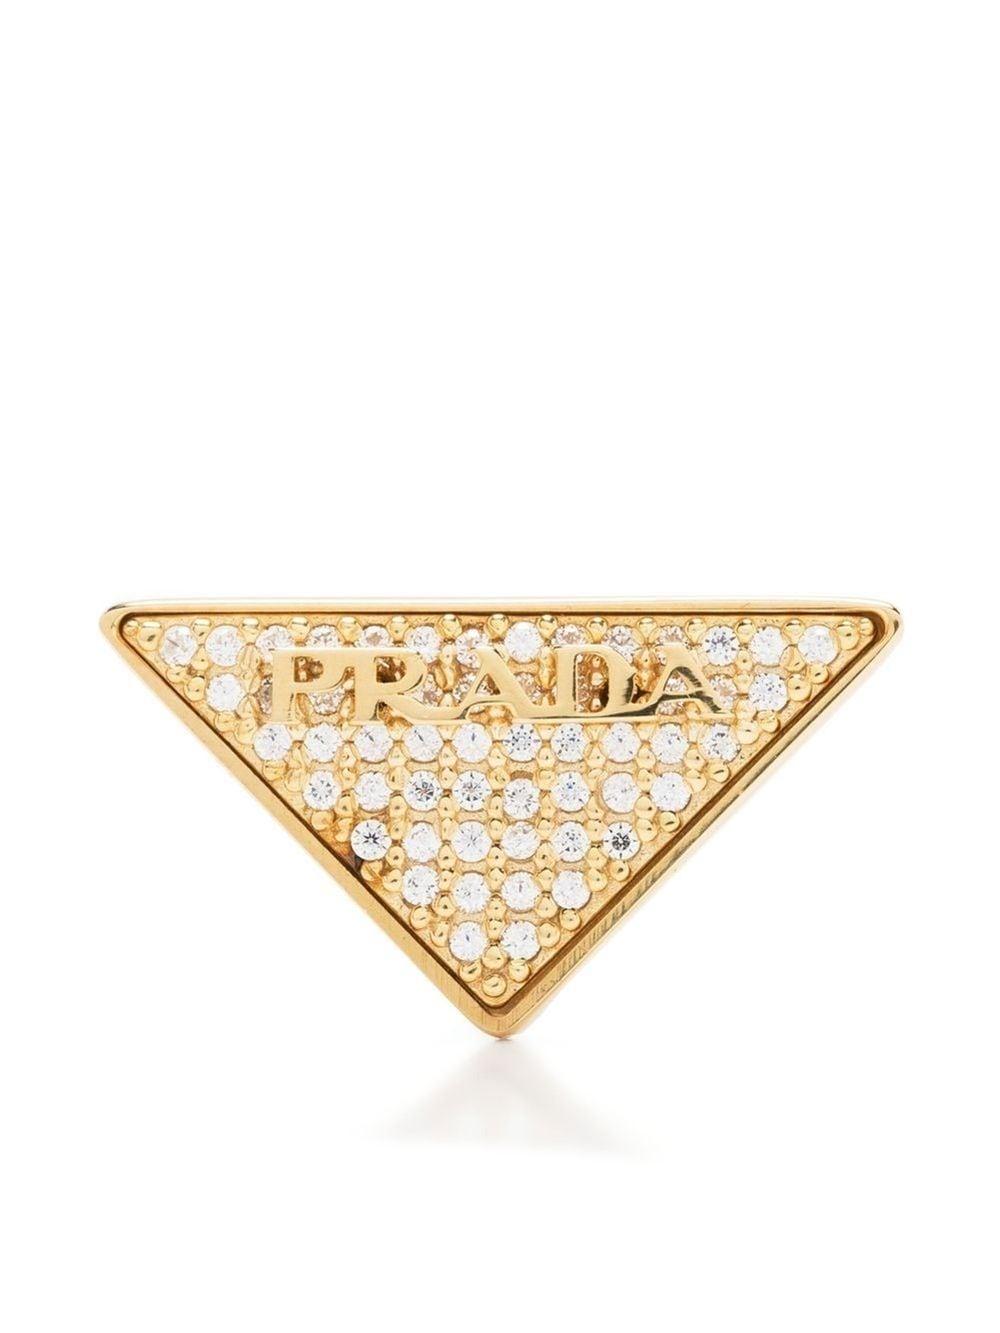 Prada Crystal-embellished Triangle Stud Earrings in Natural | Lyst